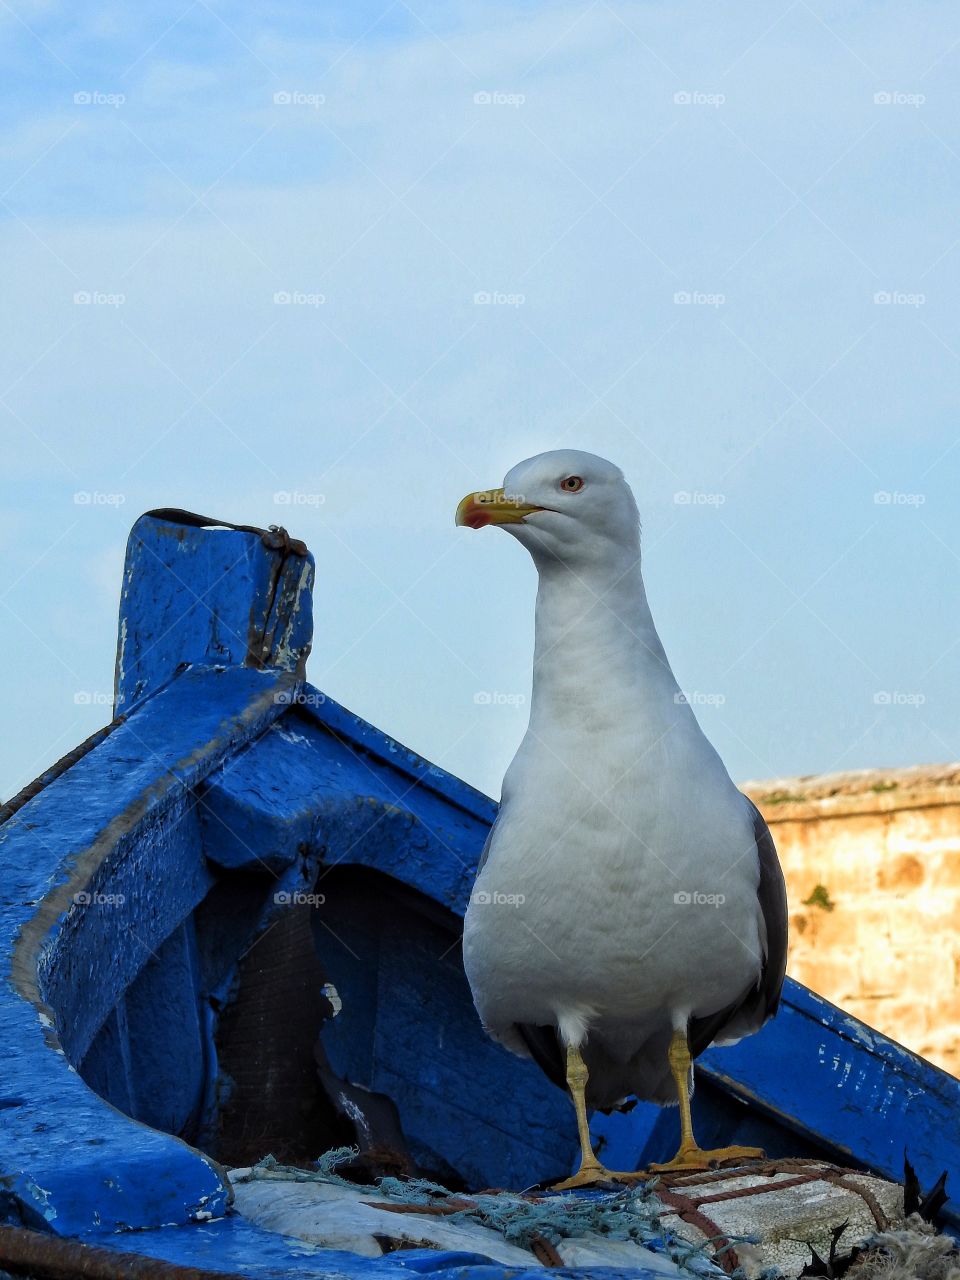 Seagull in blue boat